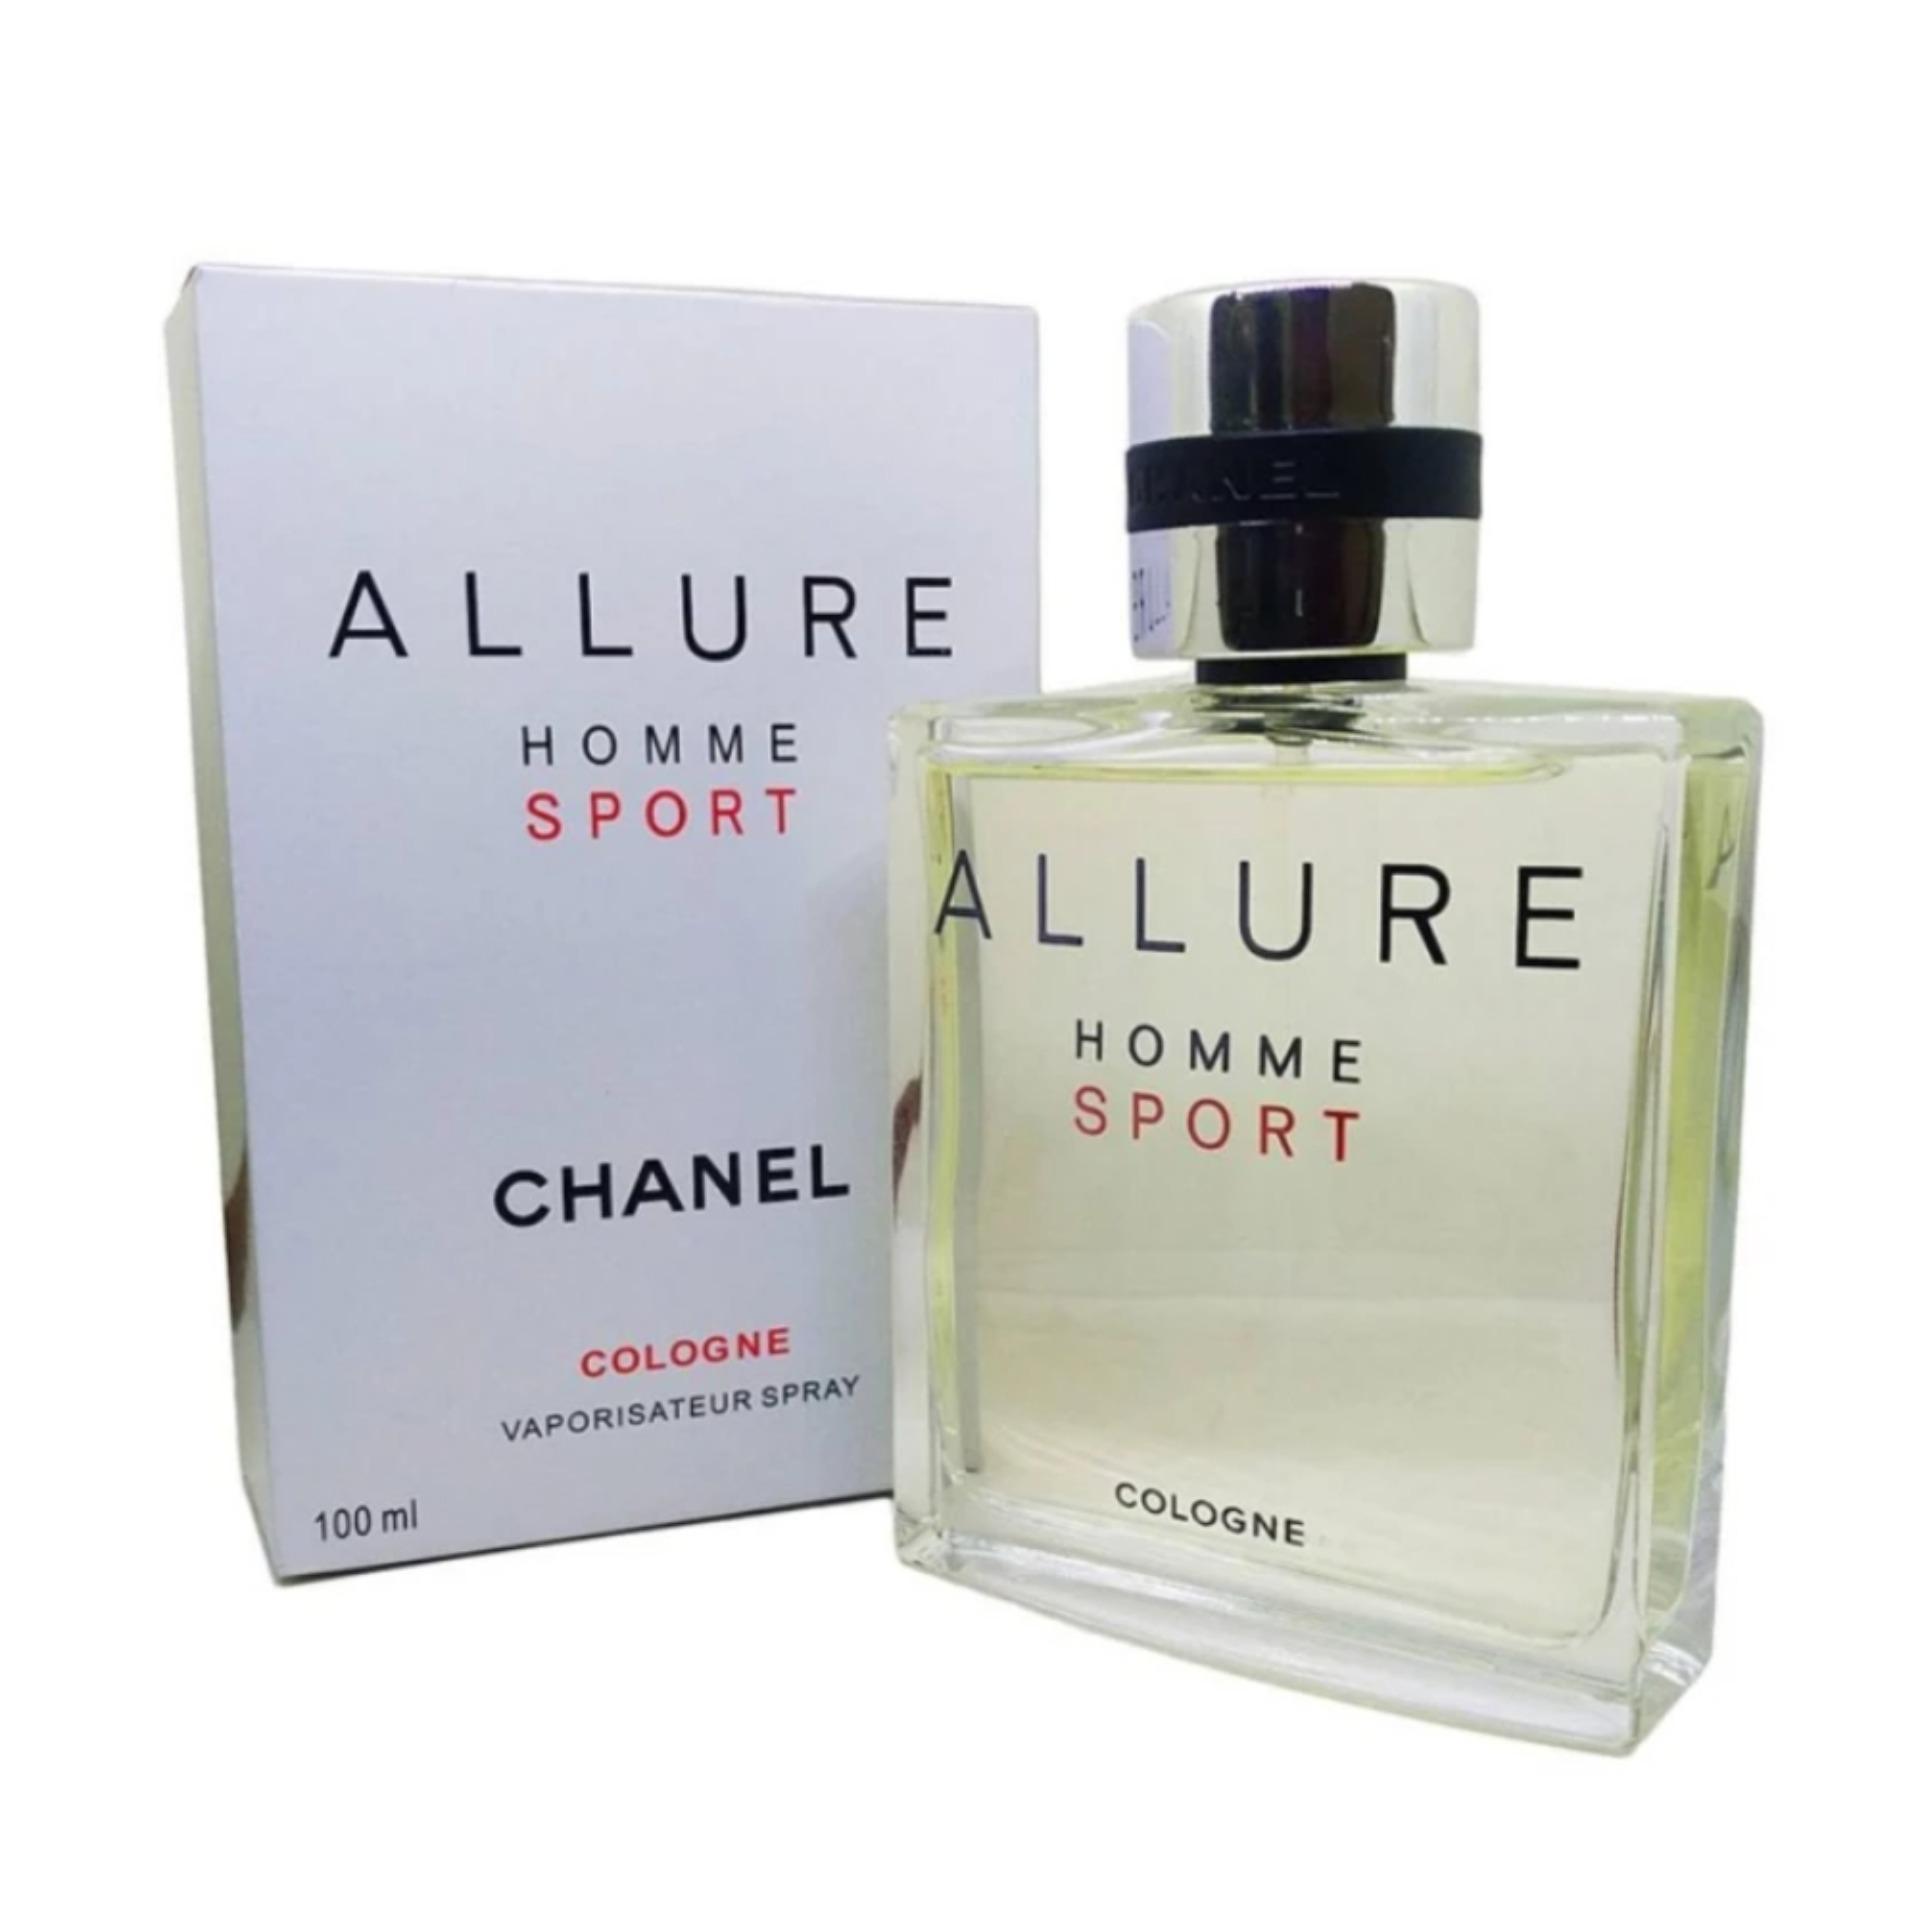 Chanel allure homme sport цены. Chanel Allure homme Sport 100ml. Chanel Allure homme Sport Cologne 100 ml. Аллюр хом Шанель 100 мл. Chanel Allure homme Sport.